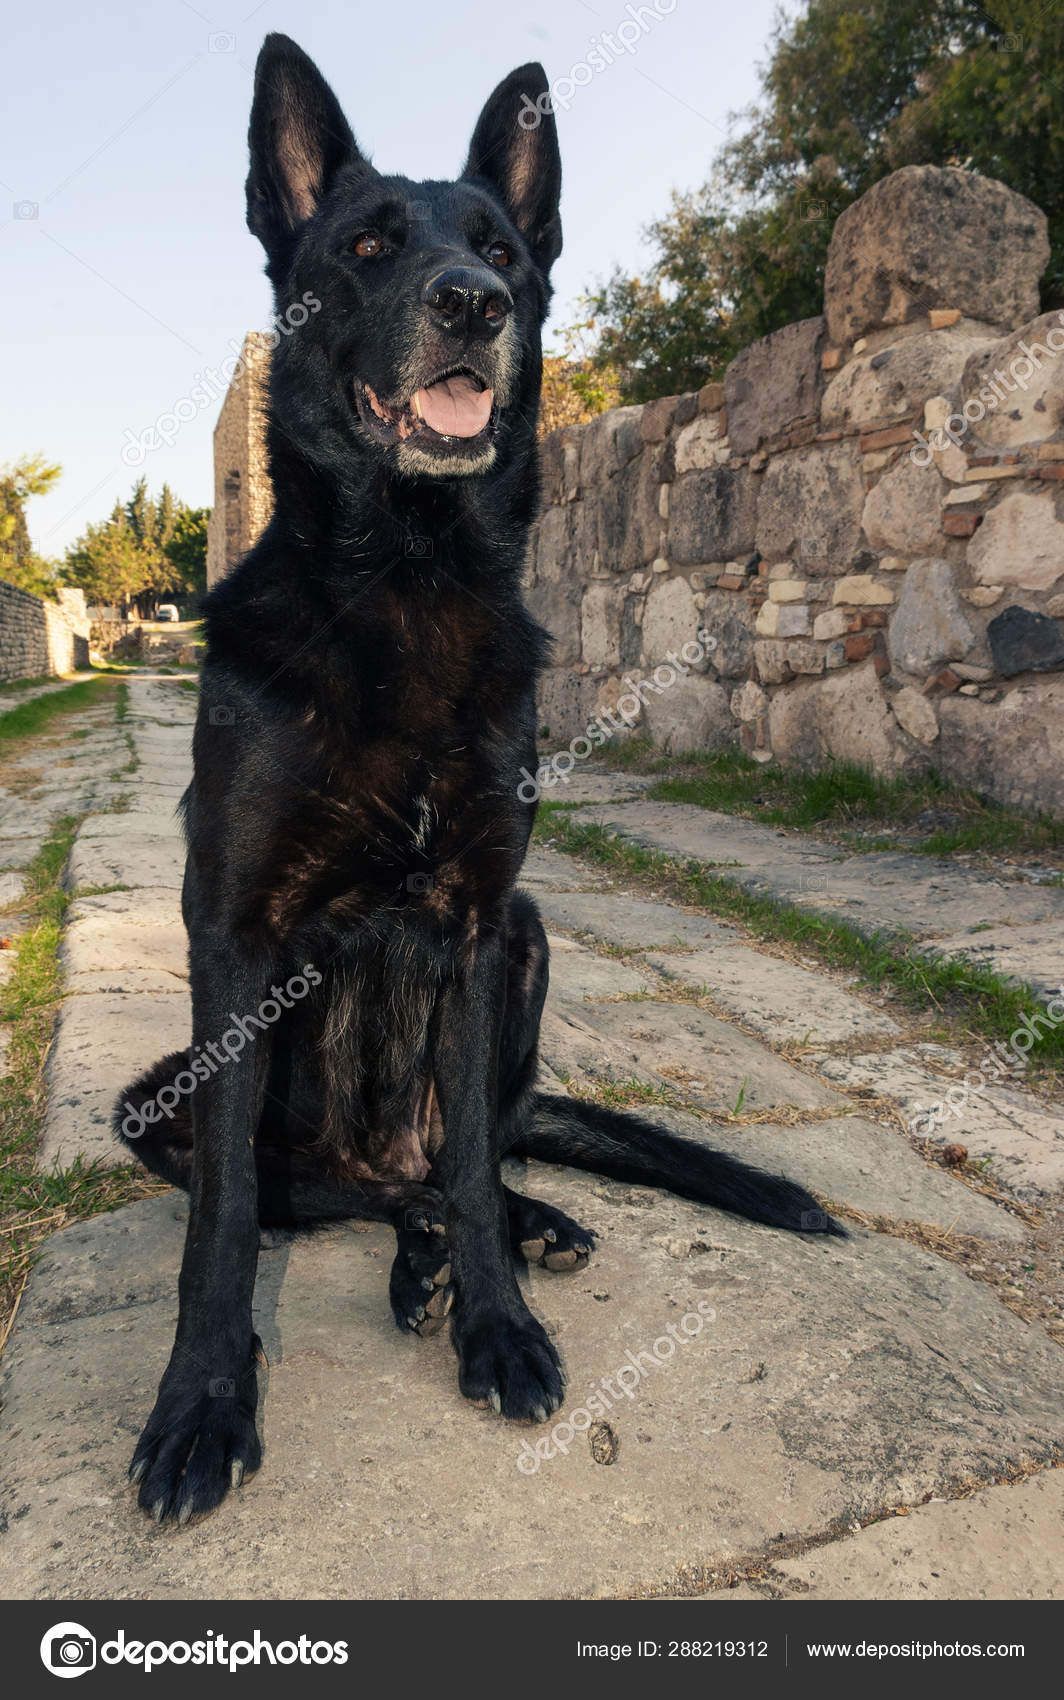 Black Belgian Malinois Dog Sitting On Paving Stone Of An Ancient Greek Alley Stock Photo C Robertax 288219312